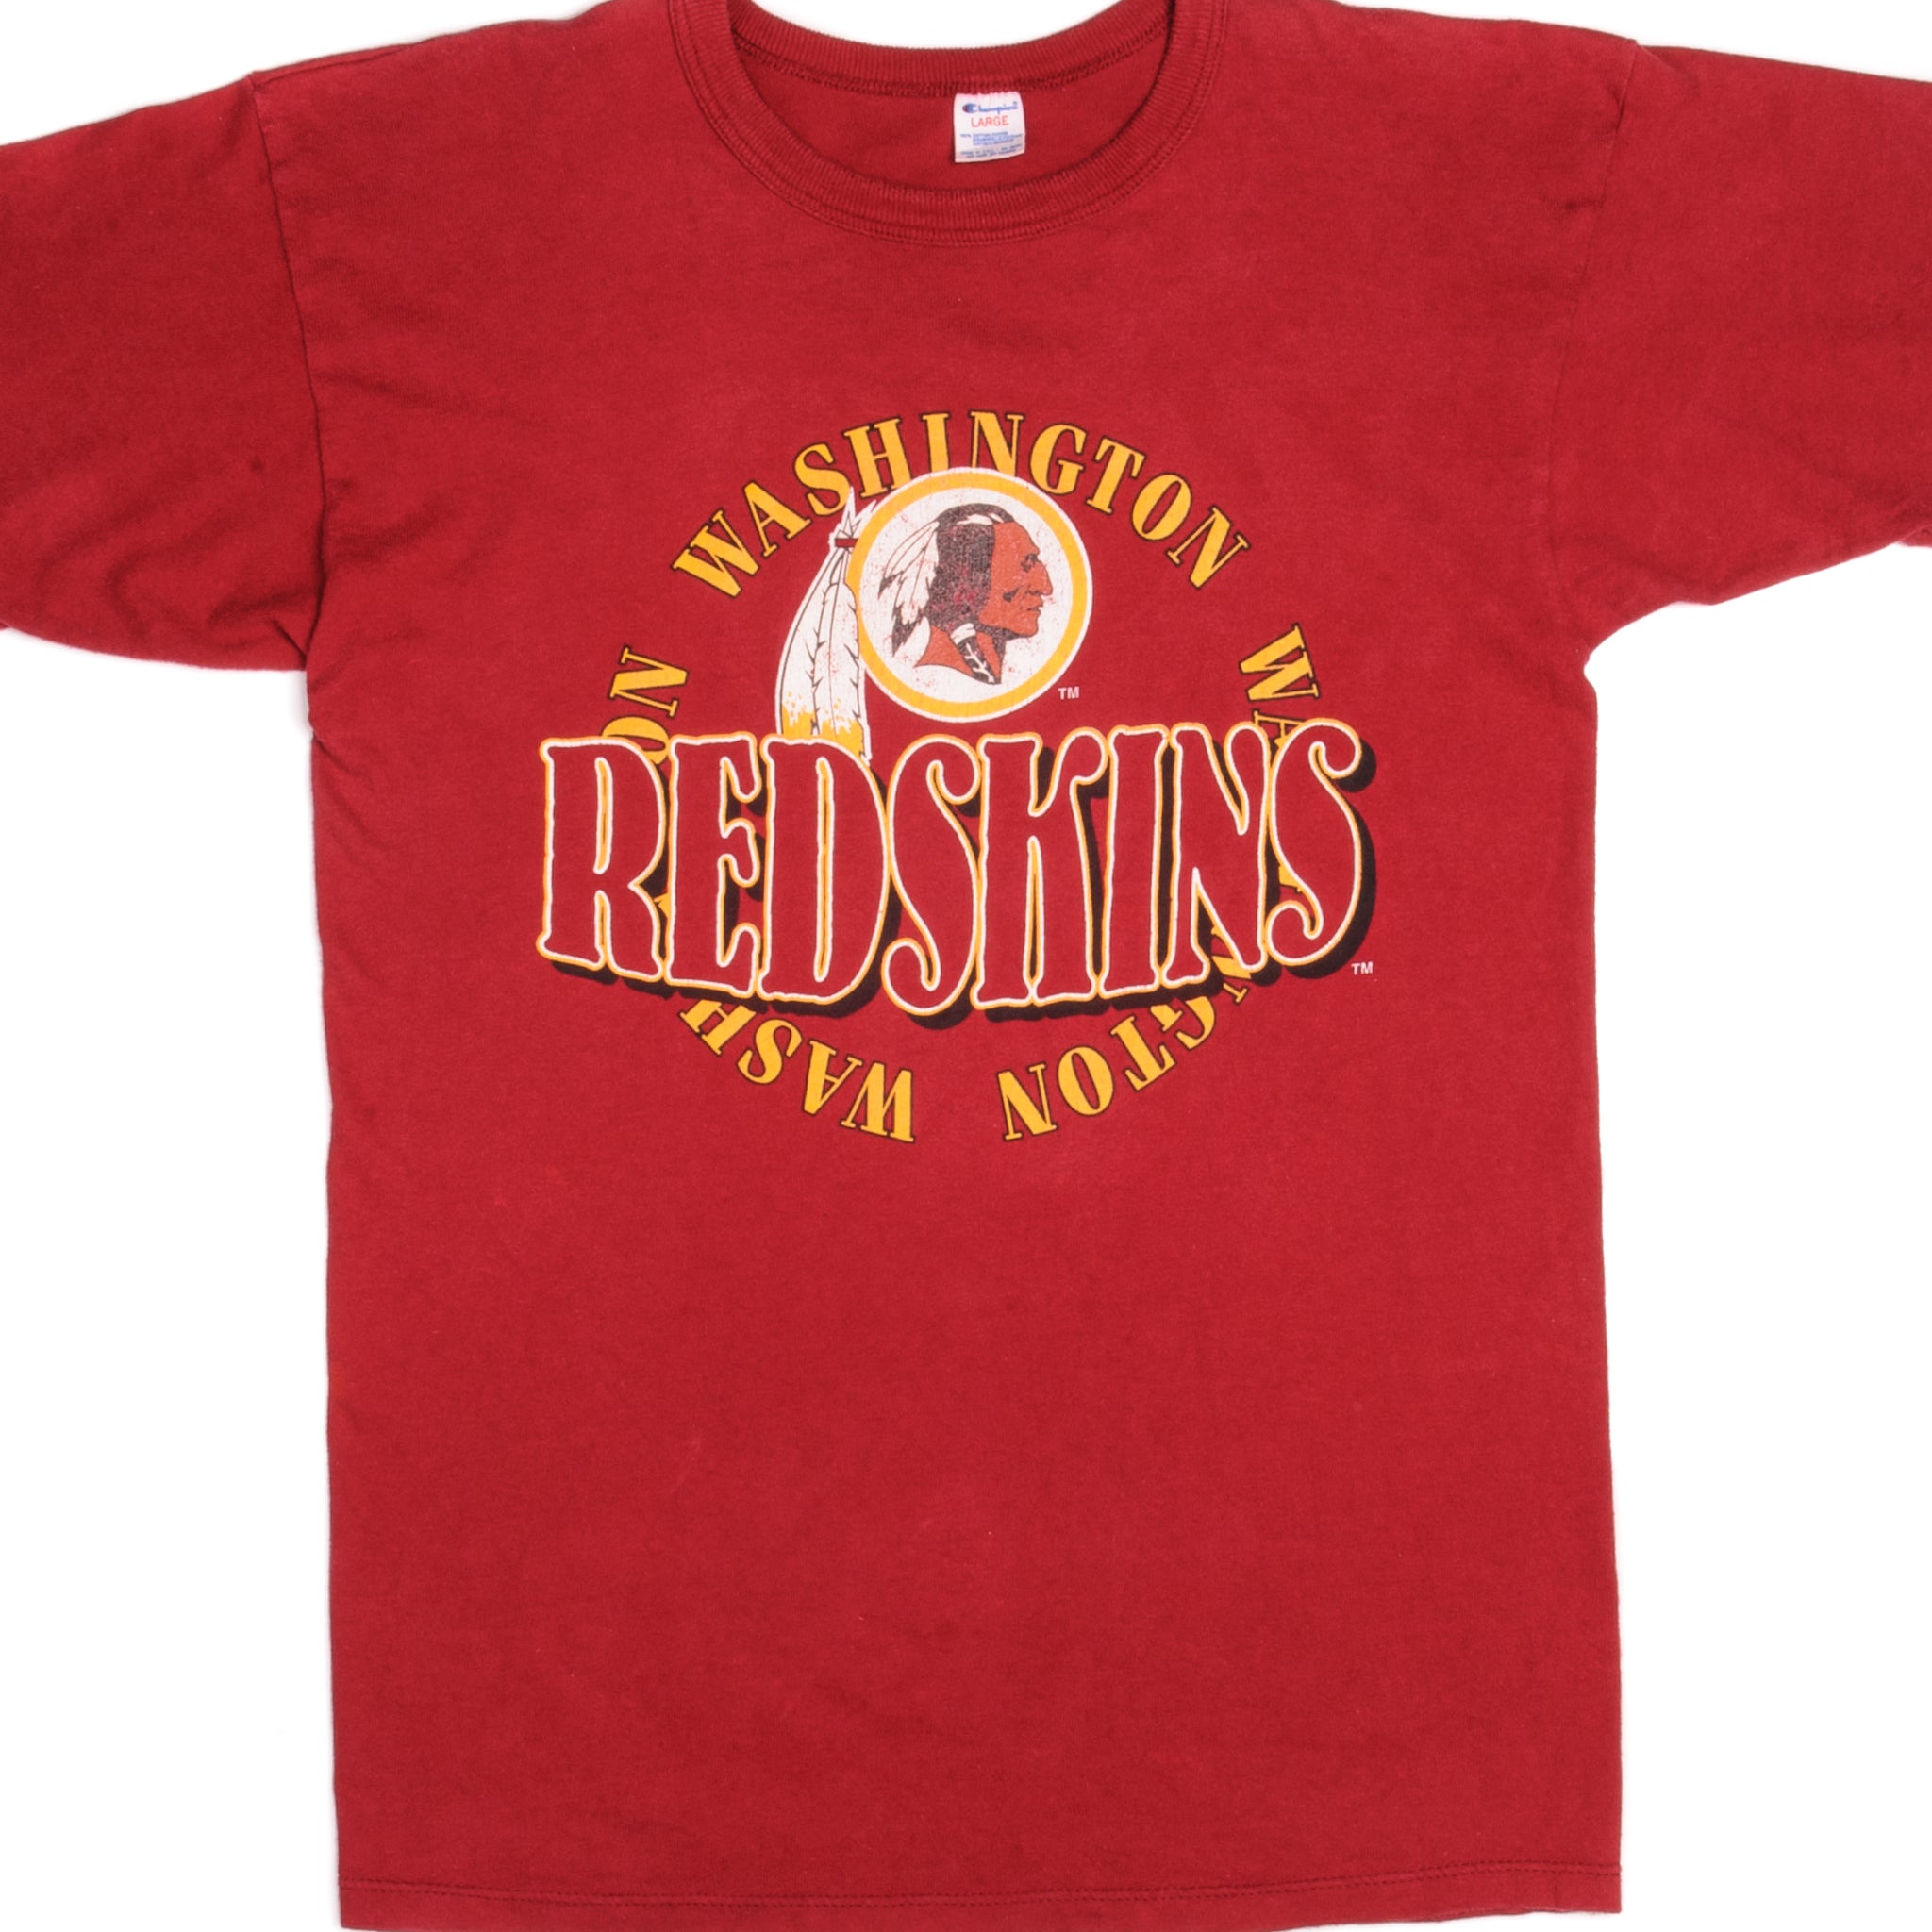 washington redskins apparel cheap